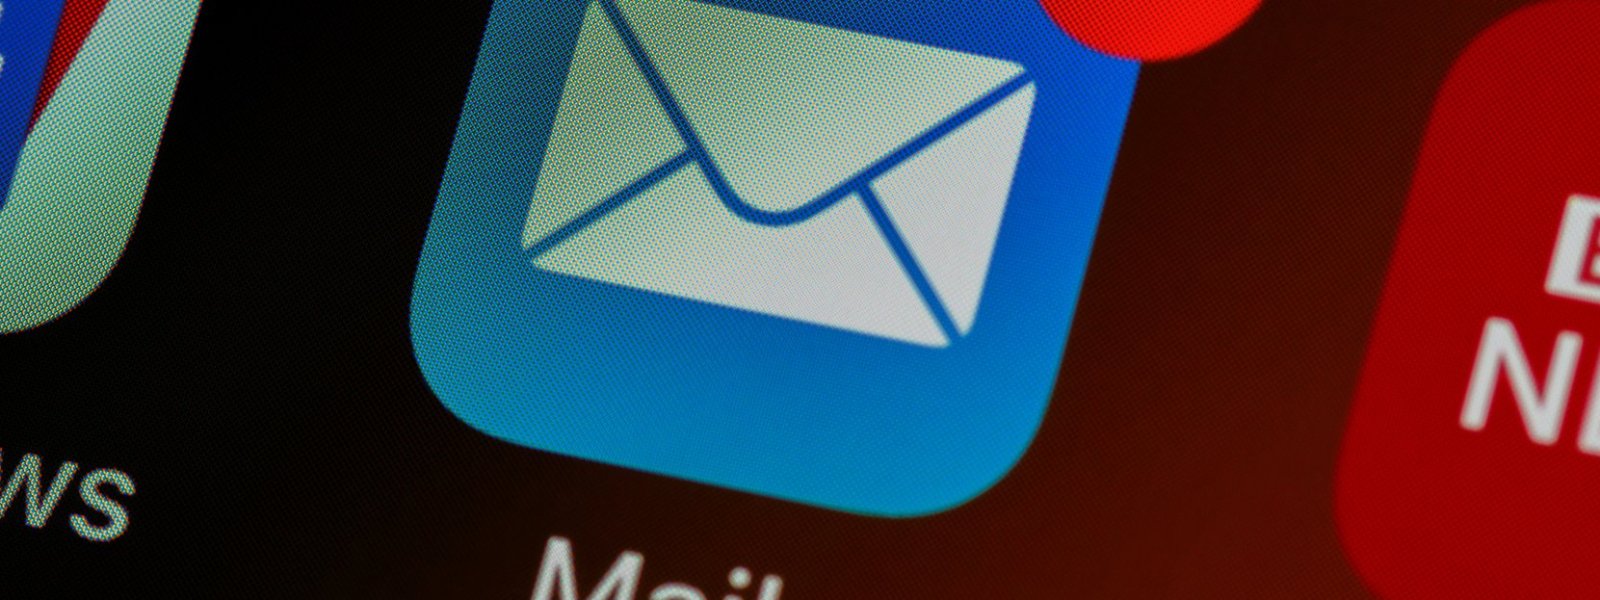 Apple Mail no permite rastrear newsletters ni otros emails